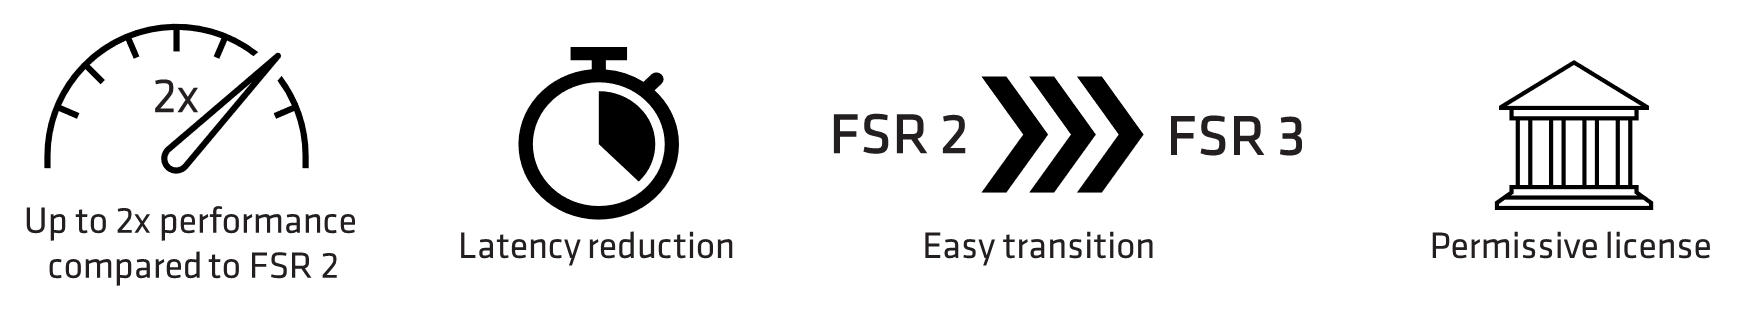 FSR 3 benefits